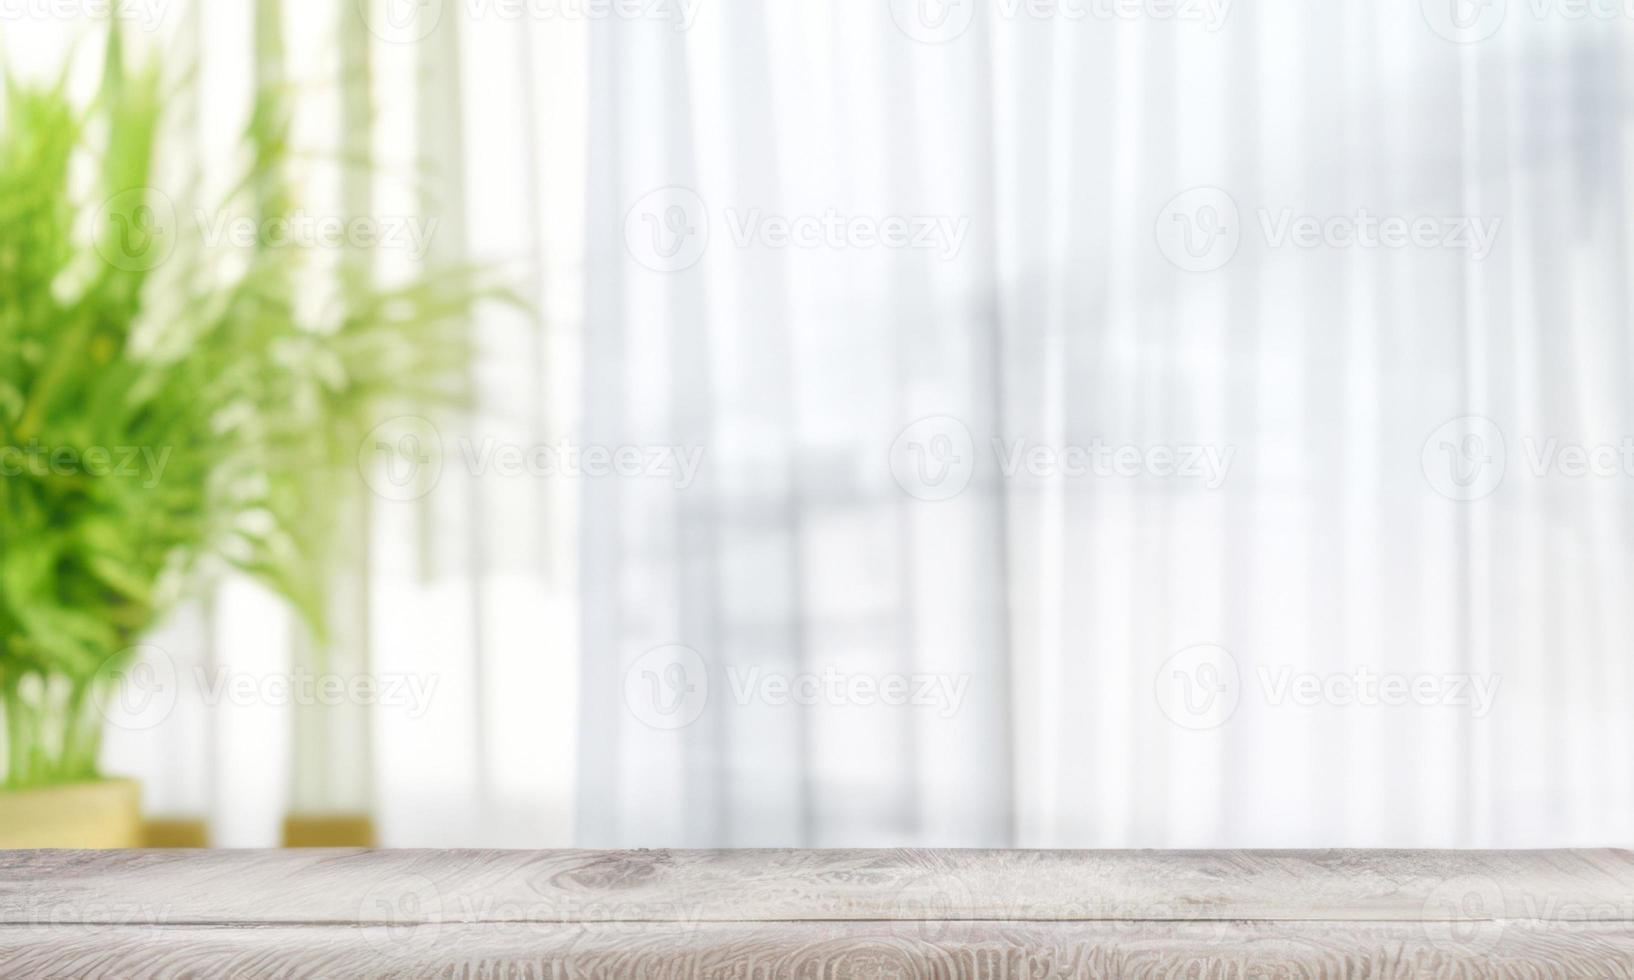 de madera mesa parte superior en borroso antecedentes de medio con cortinas ventana foto